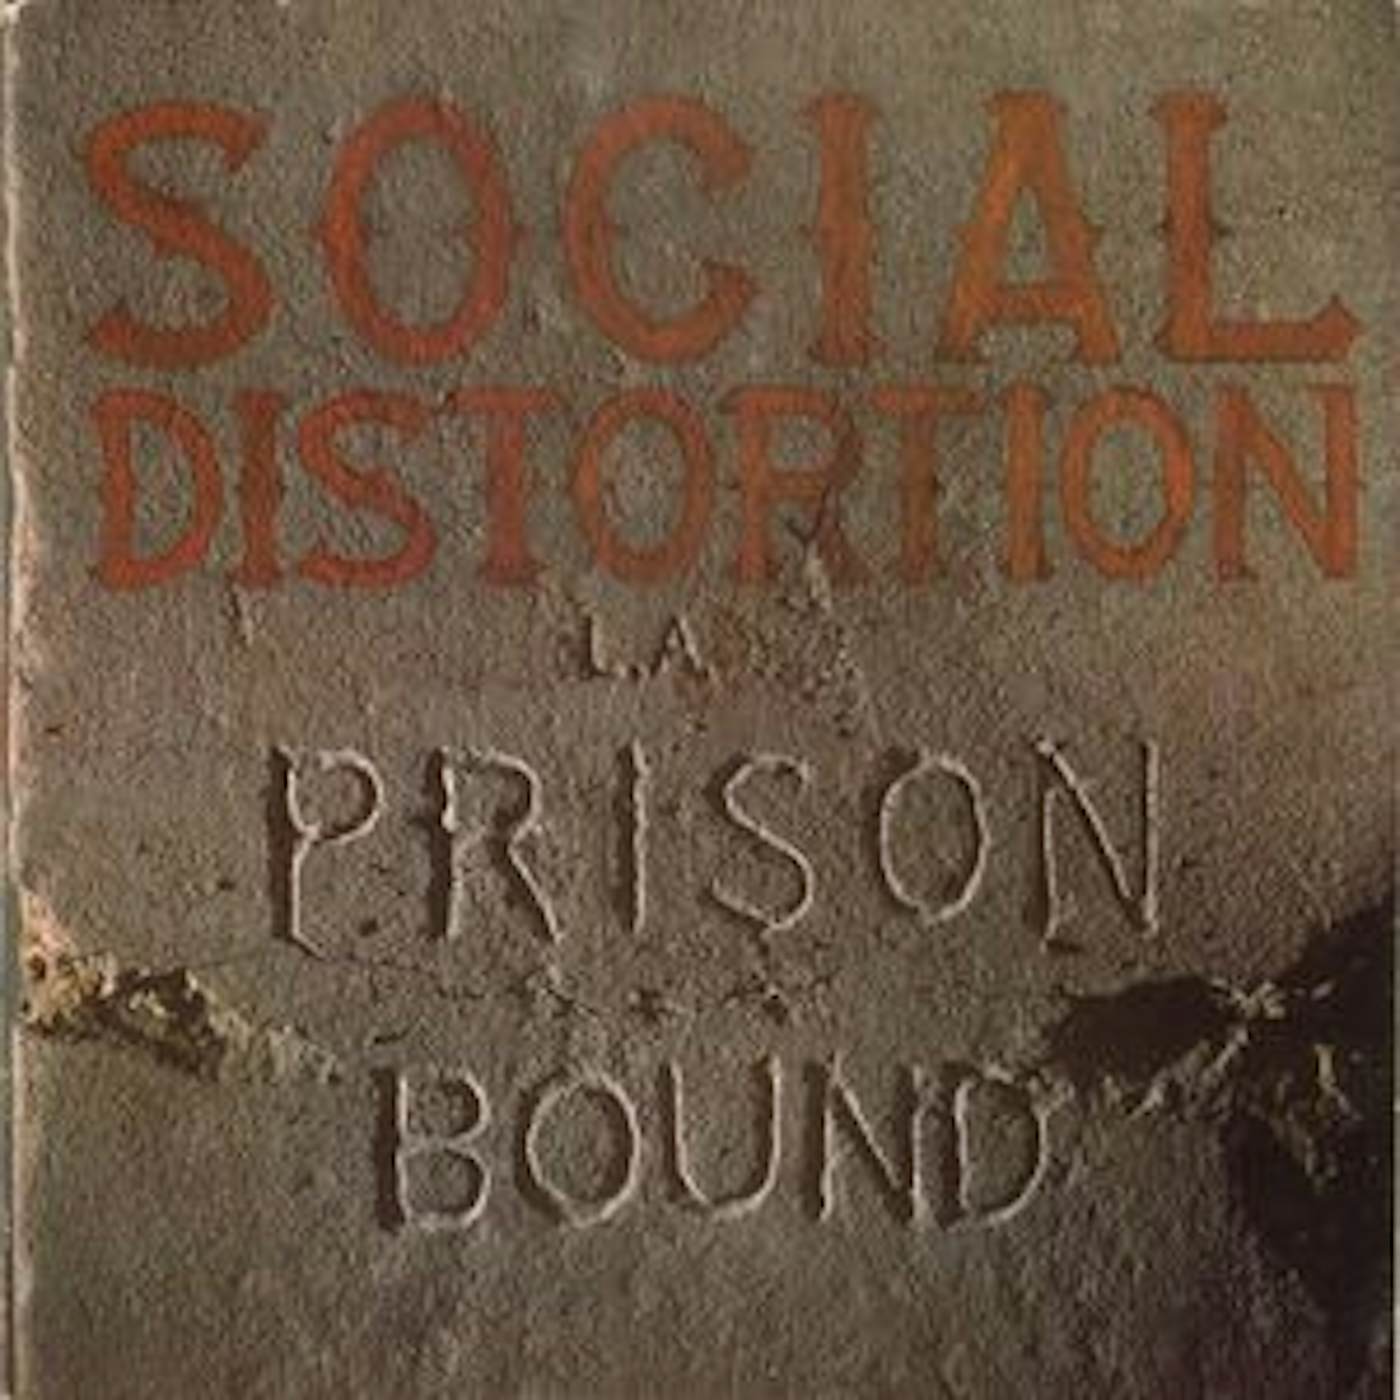 Social Distortion Prison Bound Vinyl Record